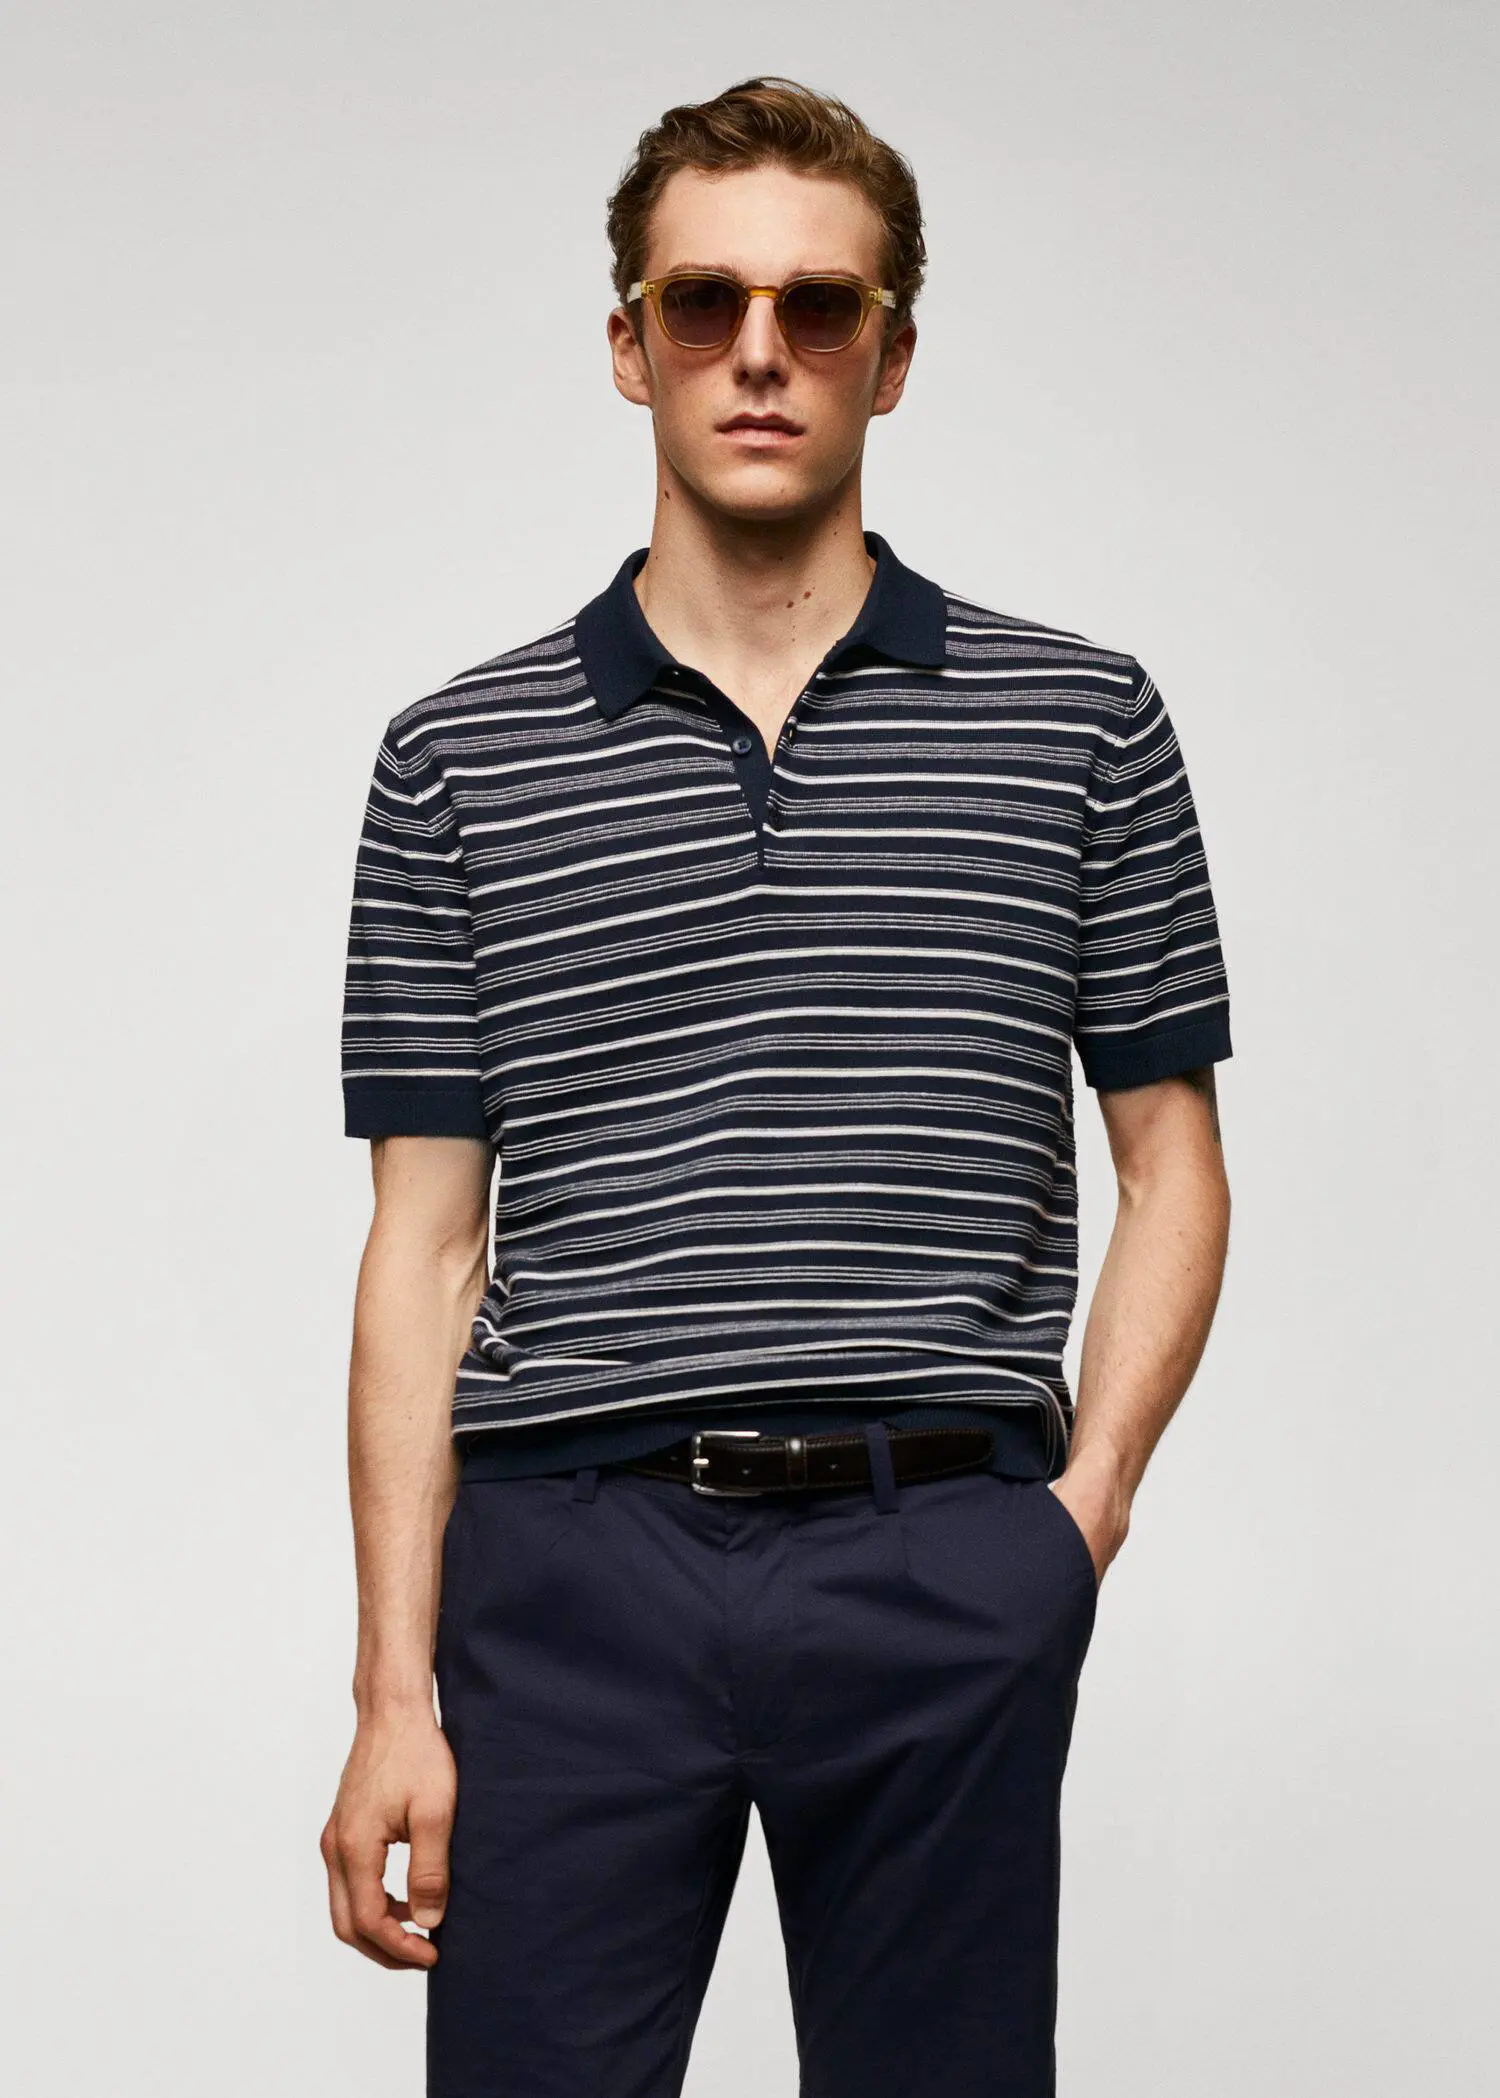 Mango Striped fine-knit polo shirt. a man in a striped polo shirt and sunglasses. 